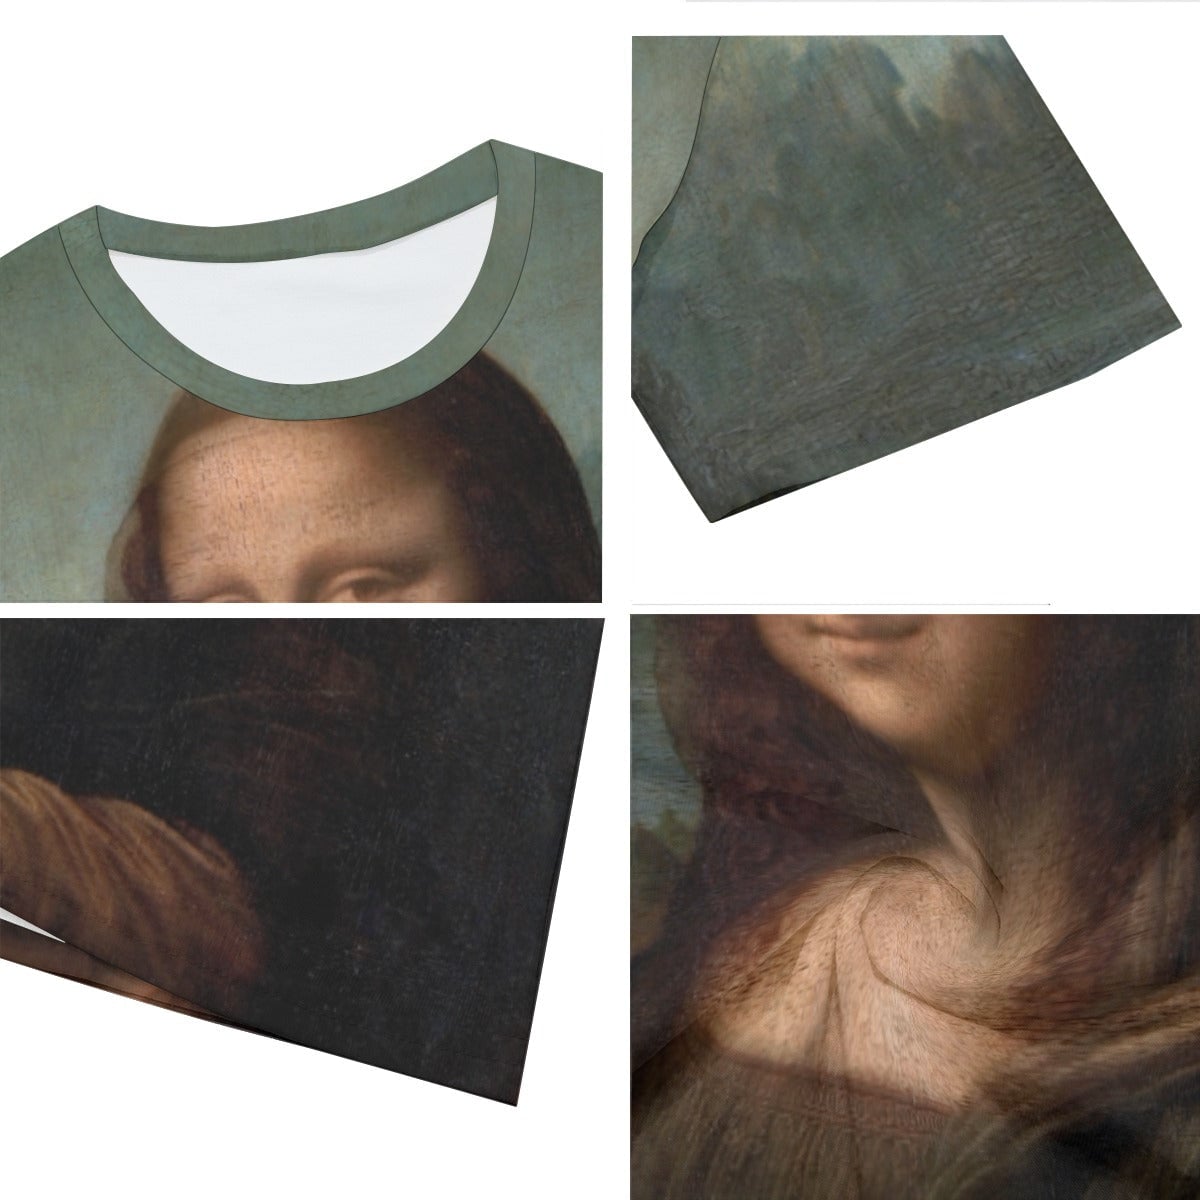 The Mona Lisa by Leonardo da Vinci T-Shirt